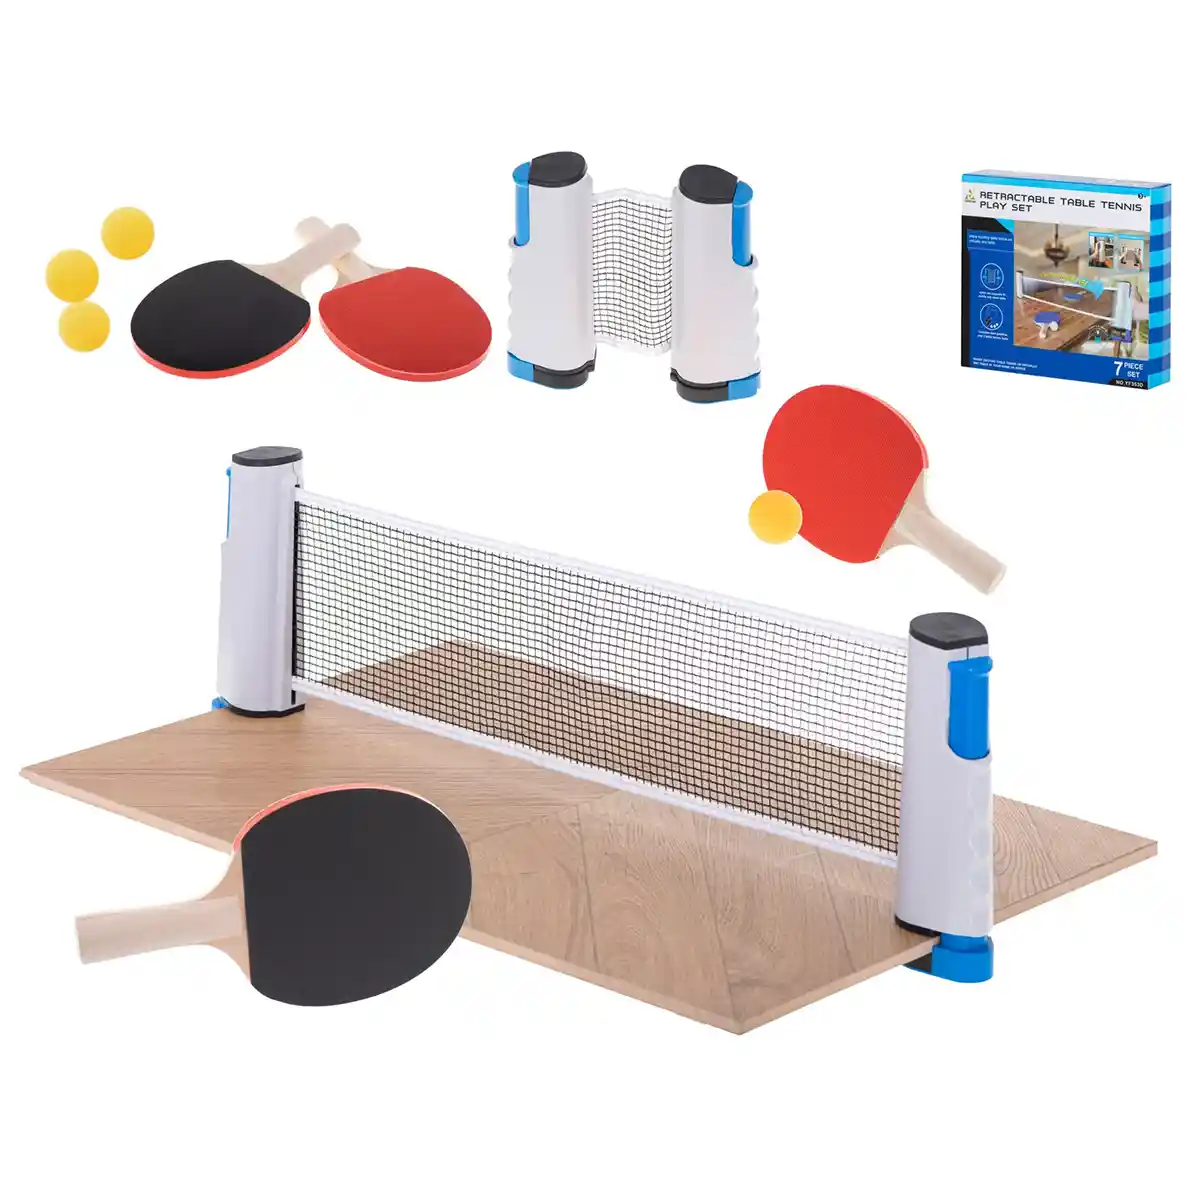 Prince Retractable Table Tennis Set